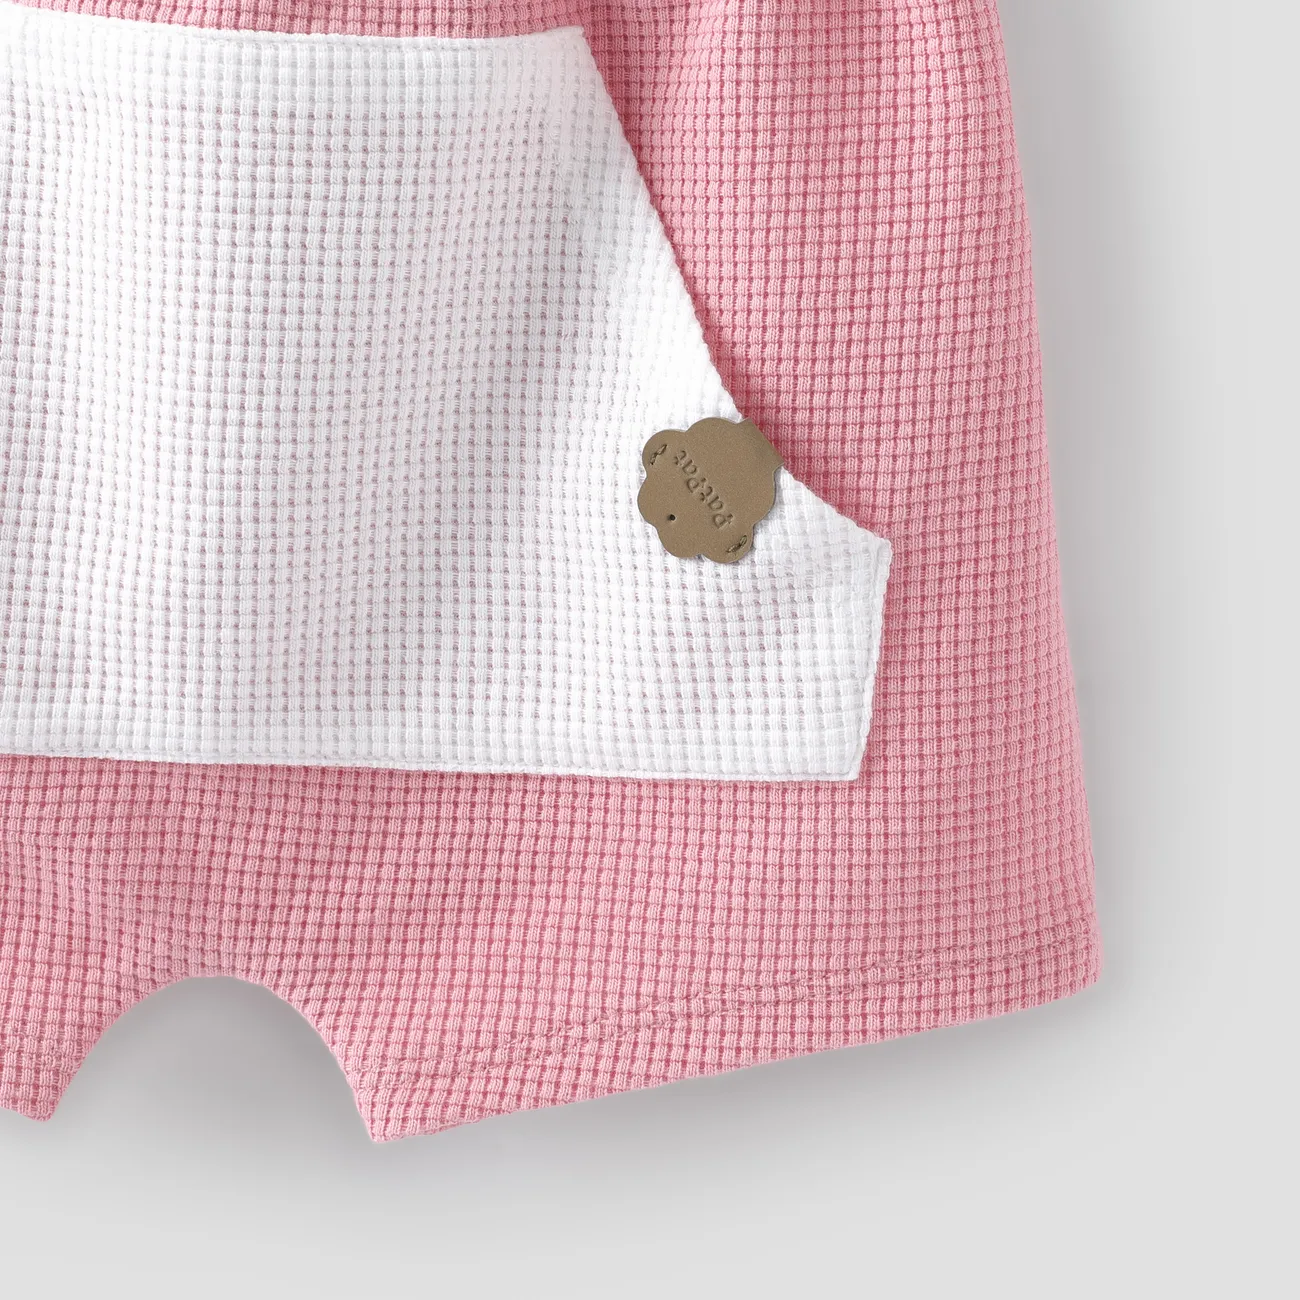 Baby Boy/Girl 2pcs Solid Color Tee and Shorts Set  Pink big image 1